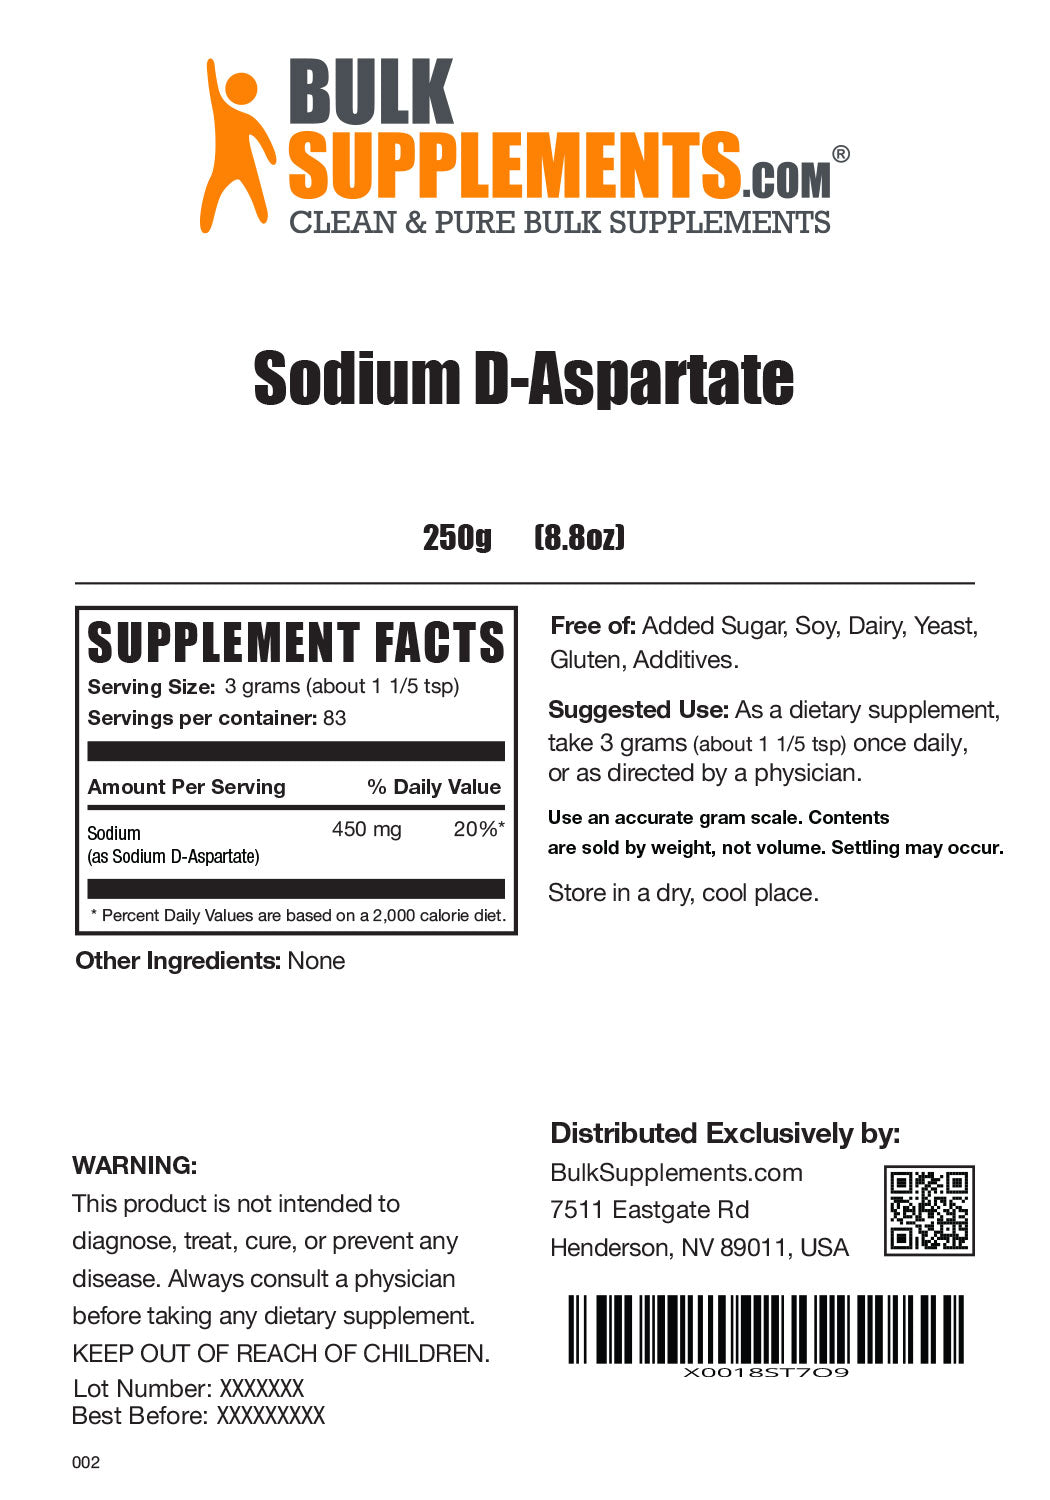 Sodium D-Aspartate powder label 250g